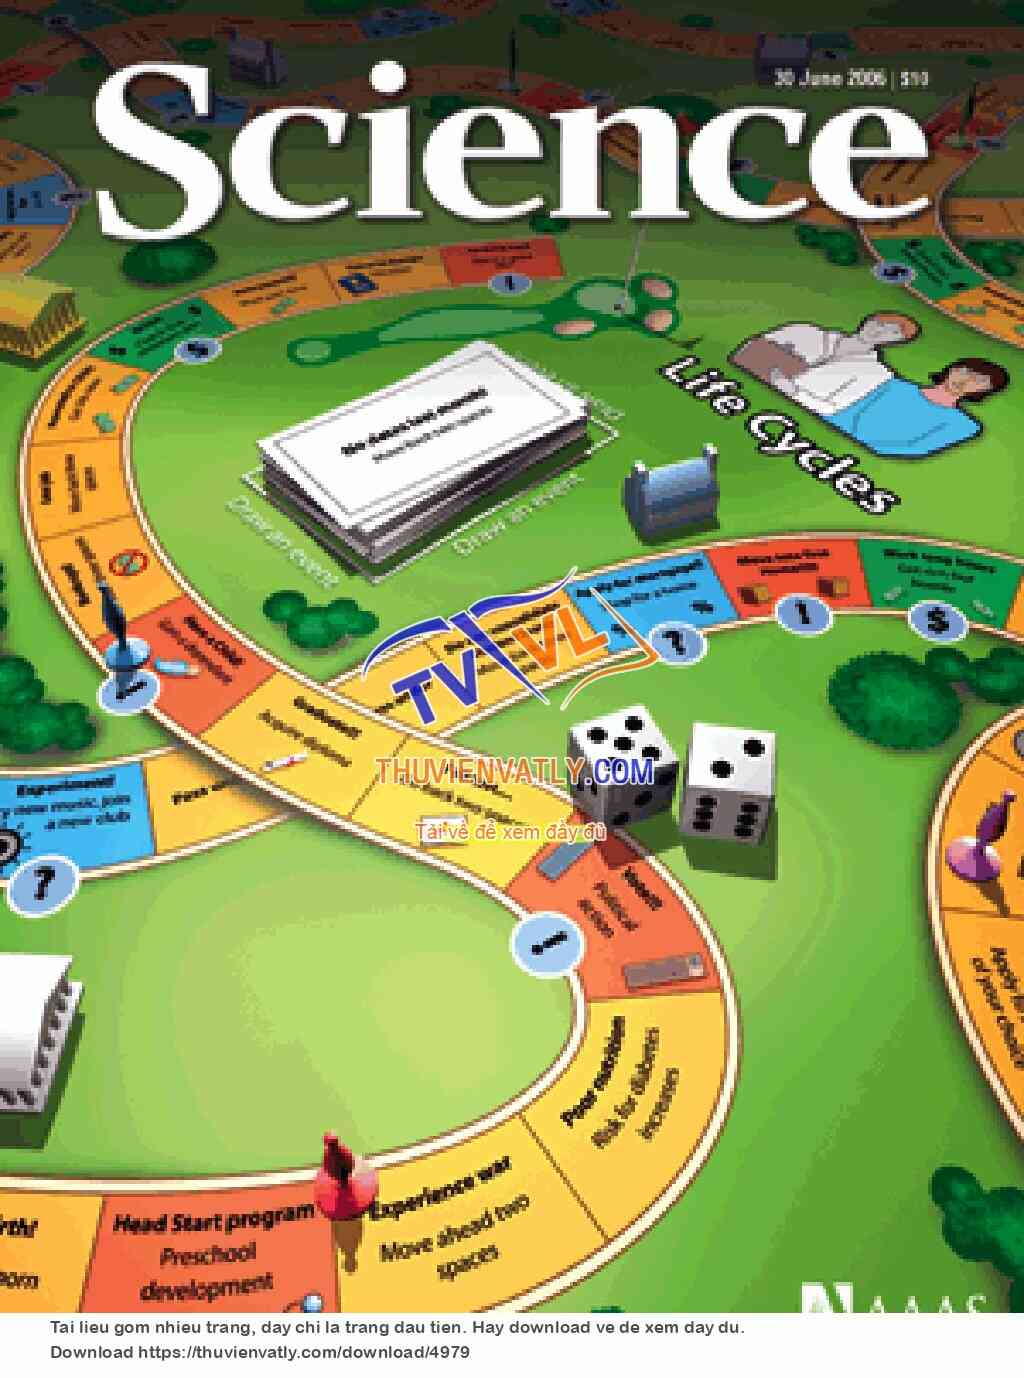 Science Magazine_2006-06-30